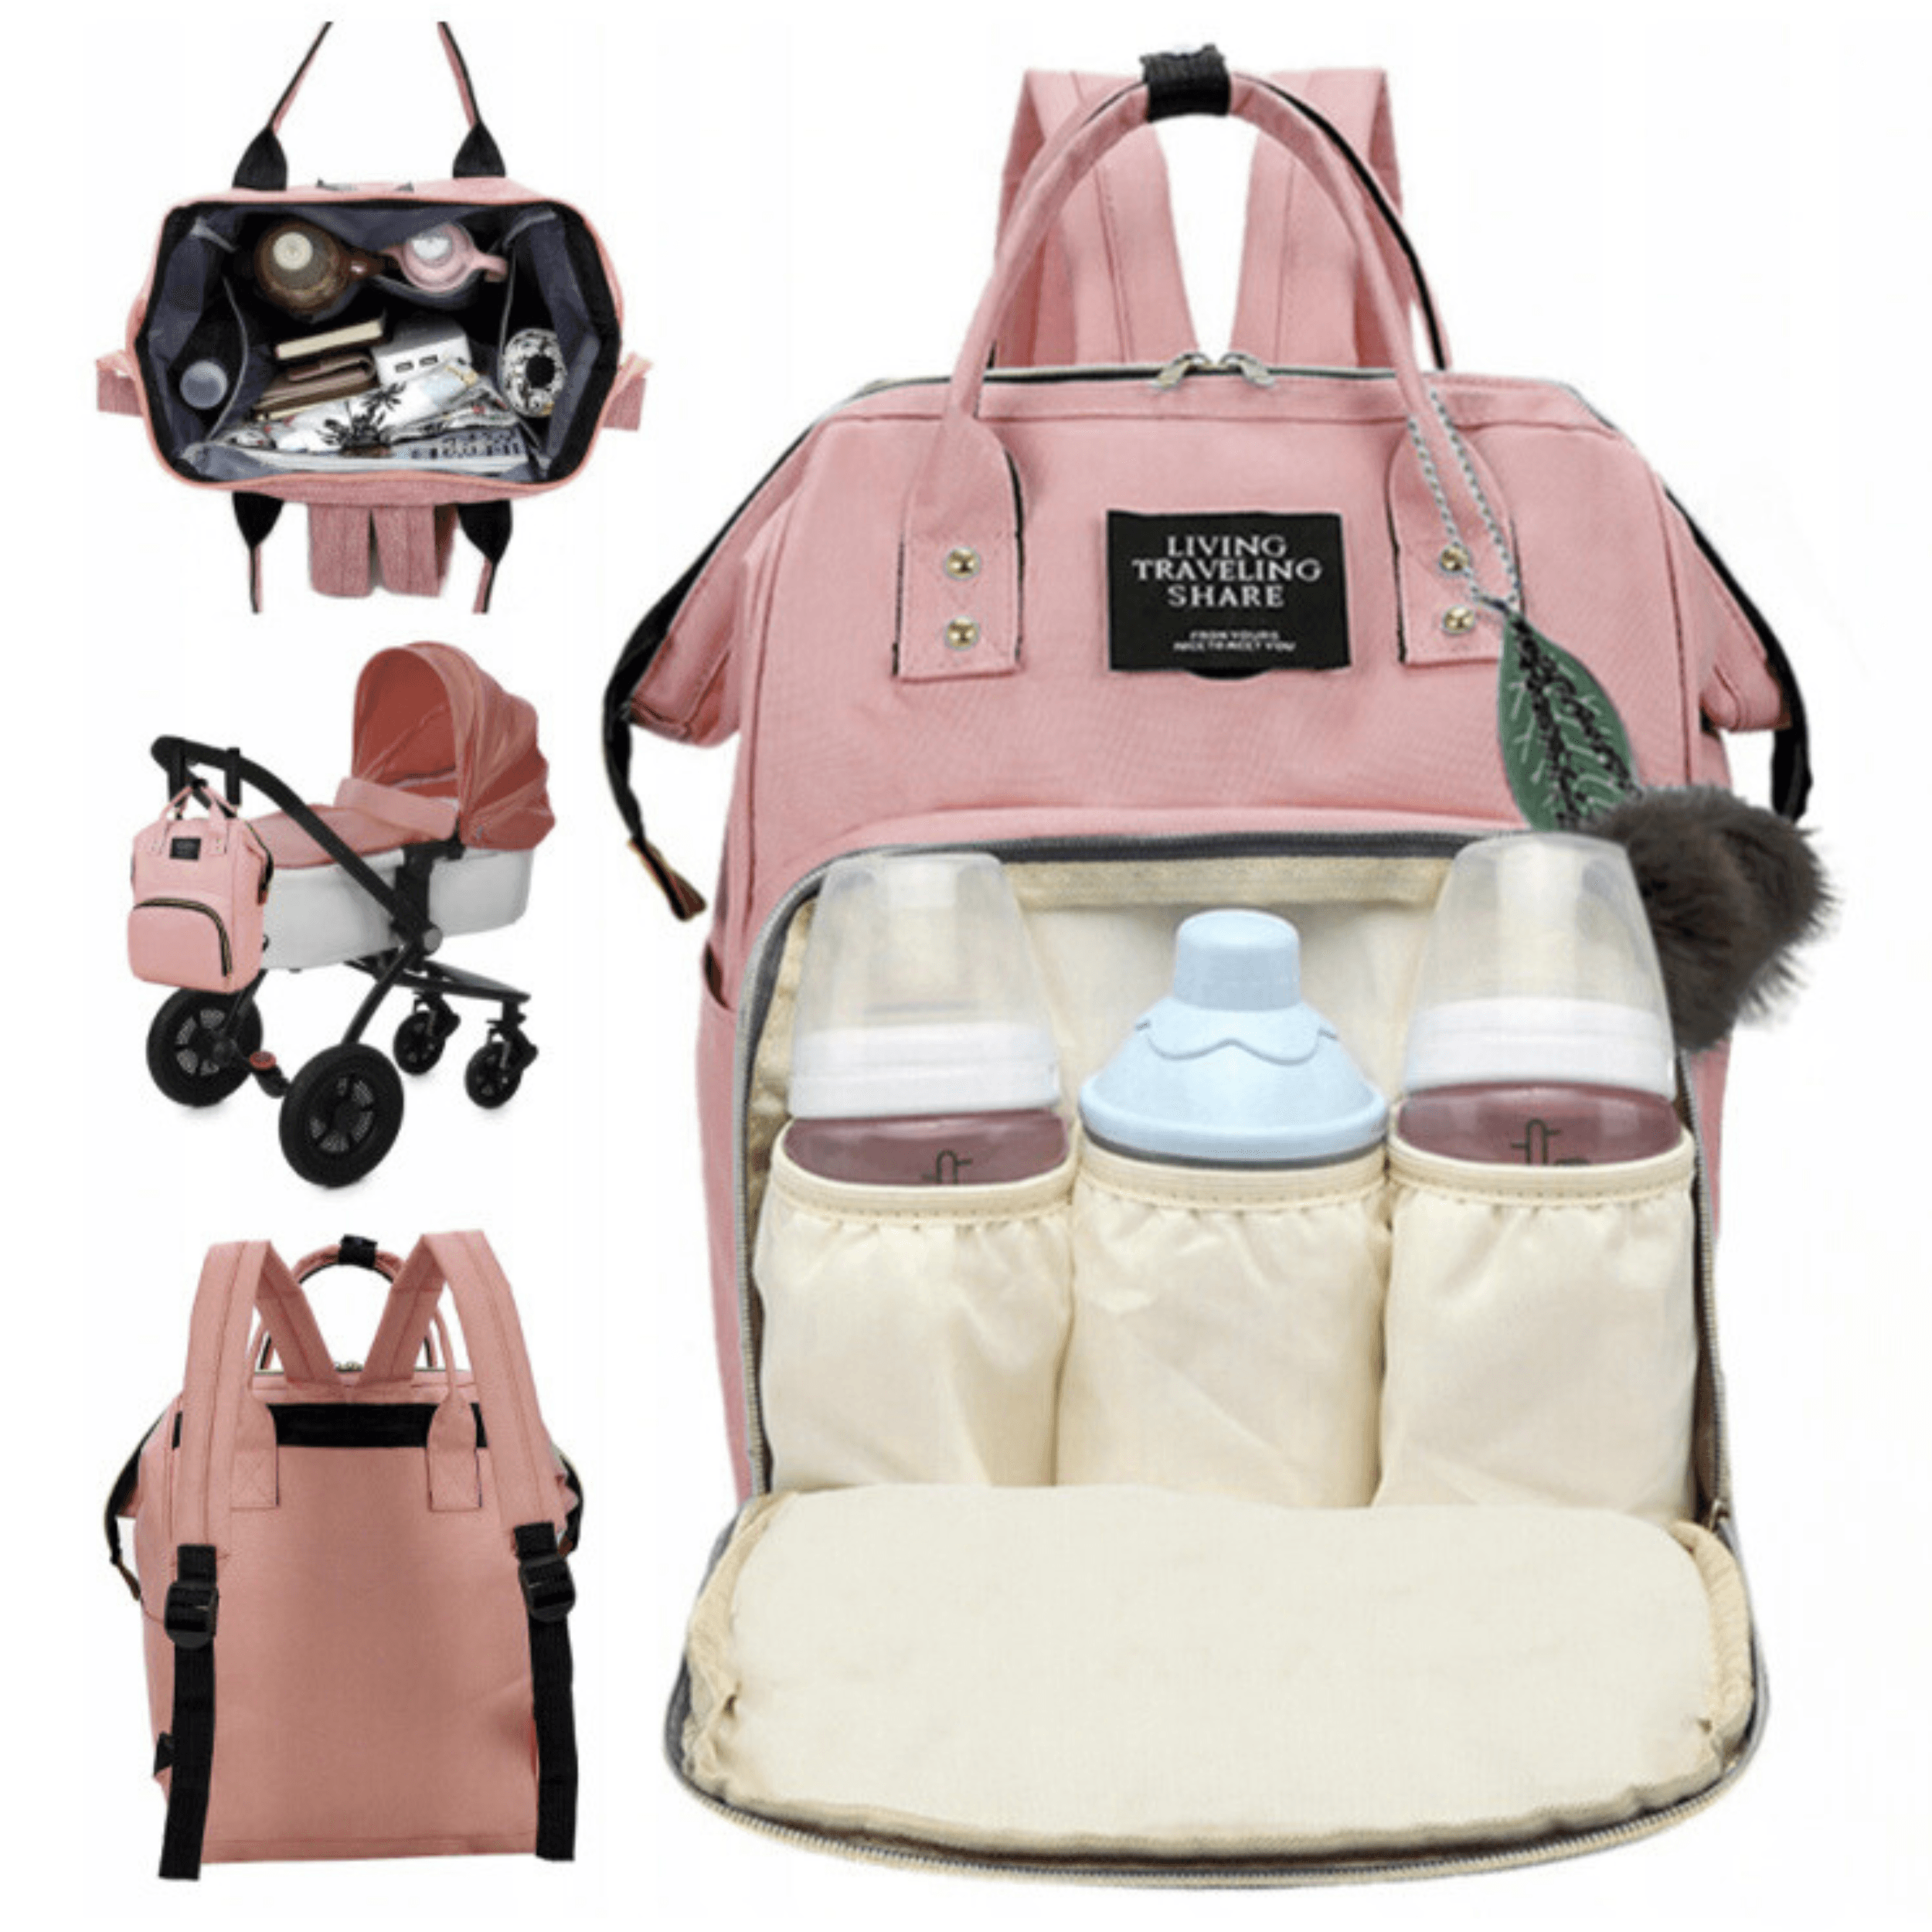 Backpack / bag for mum - pink